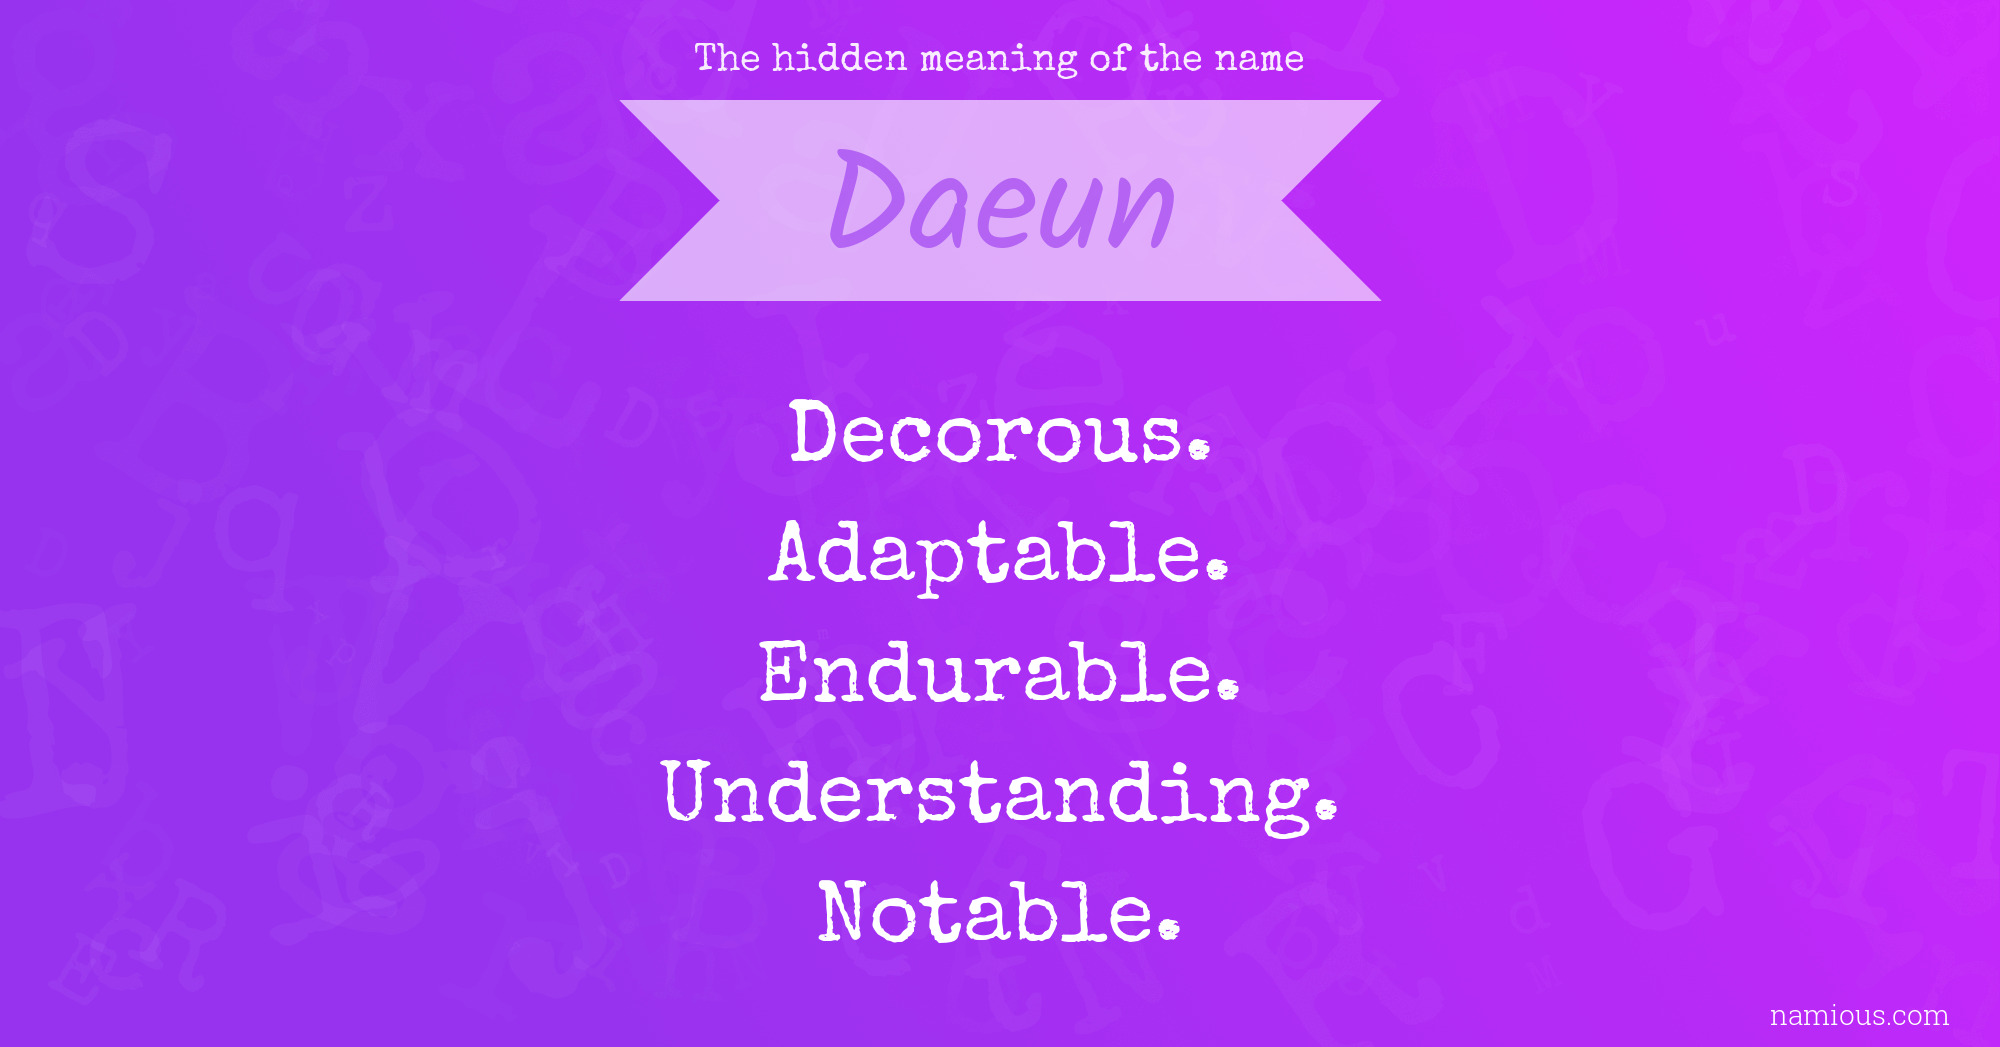 The hidden meaning of the name Daeun